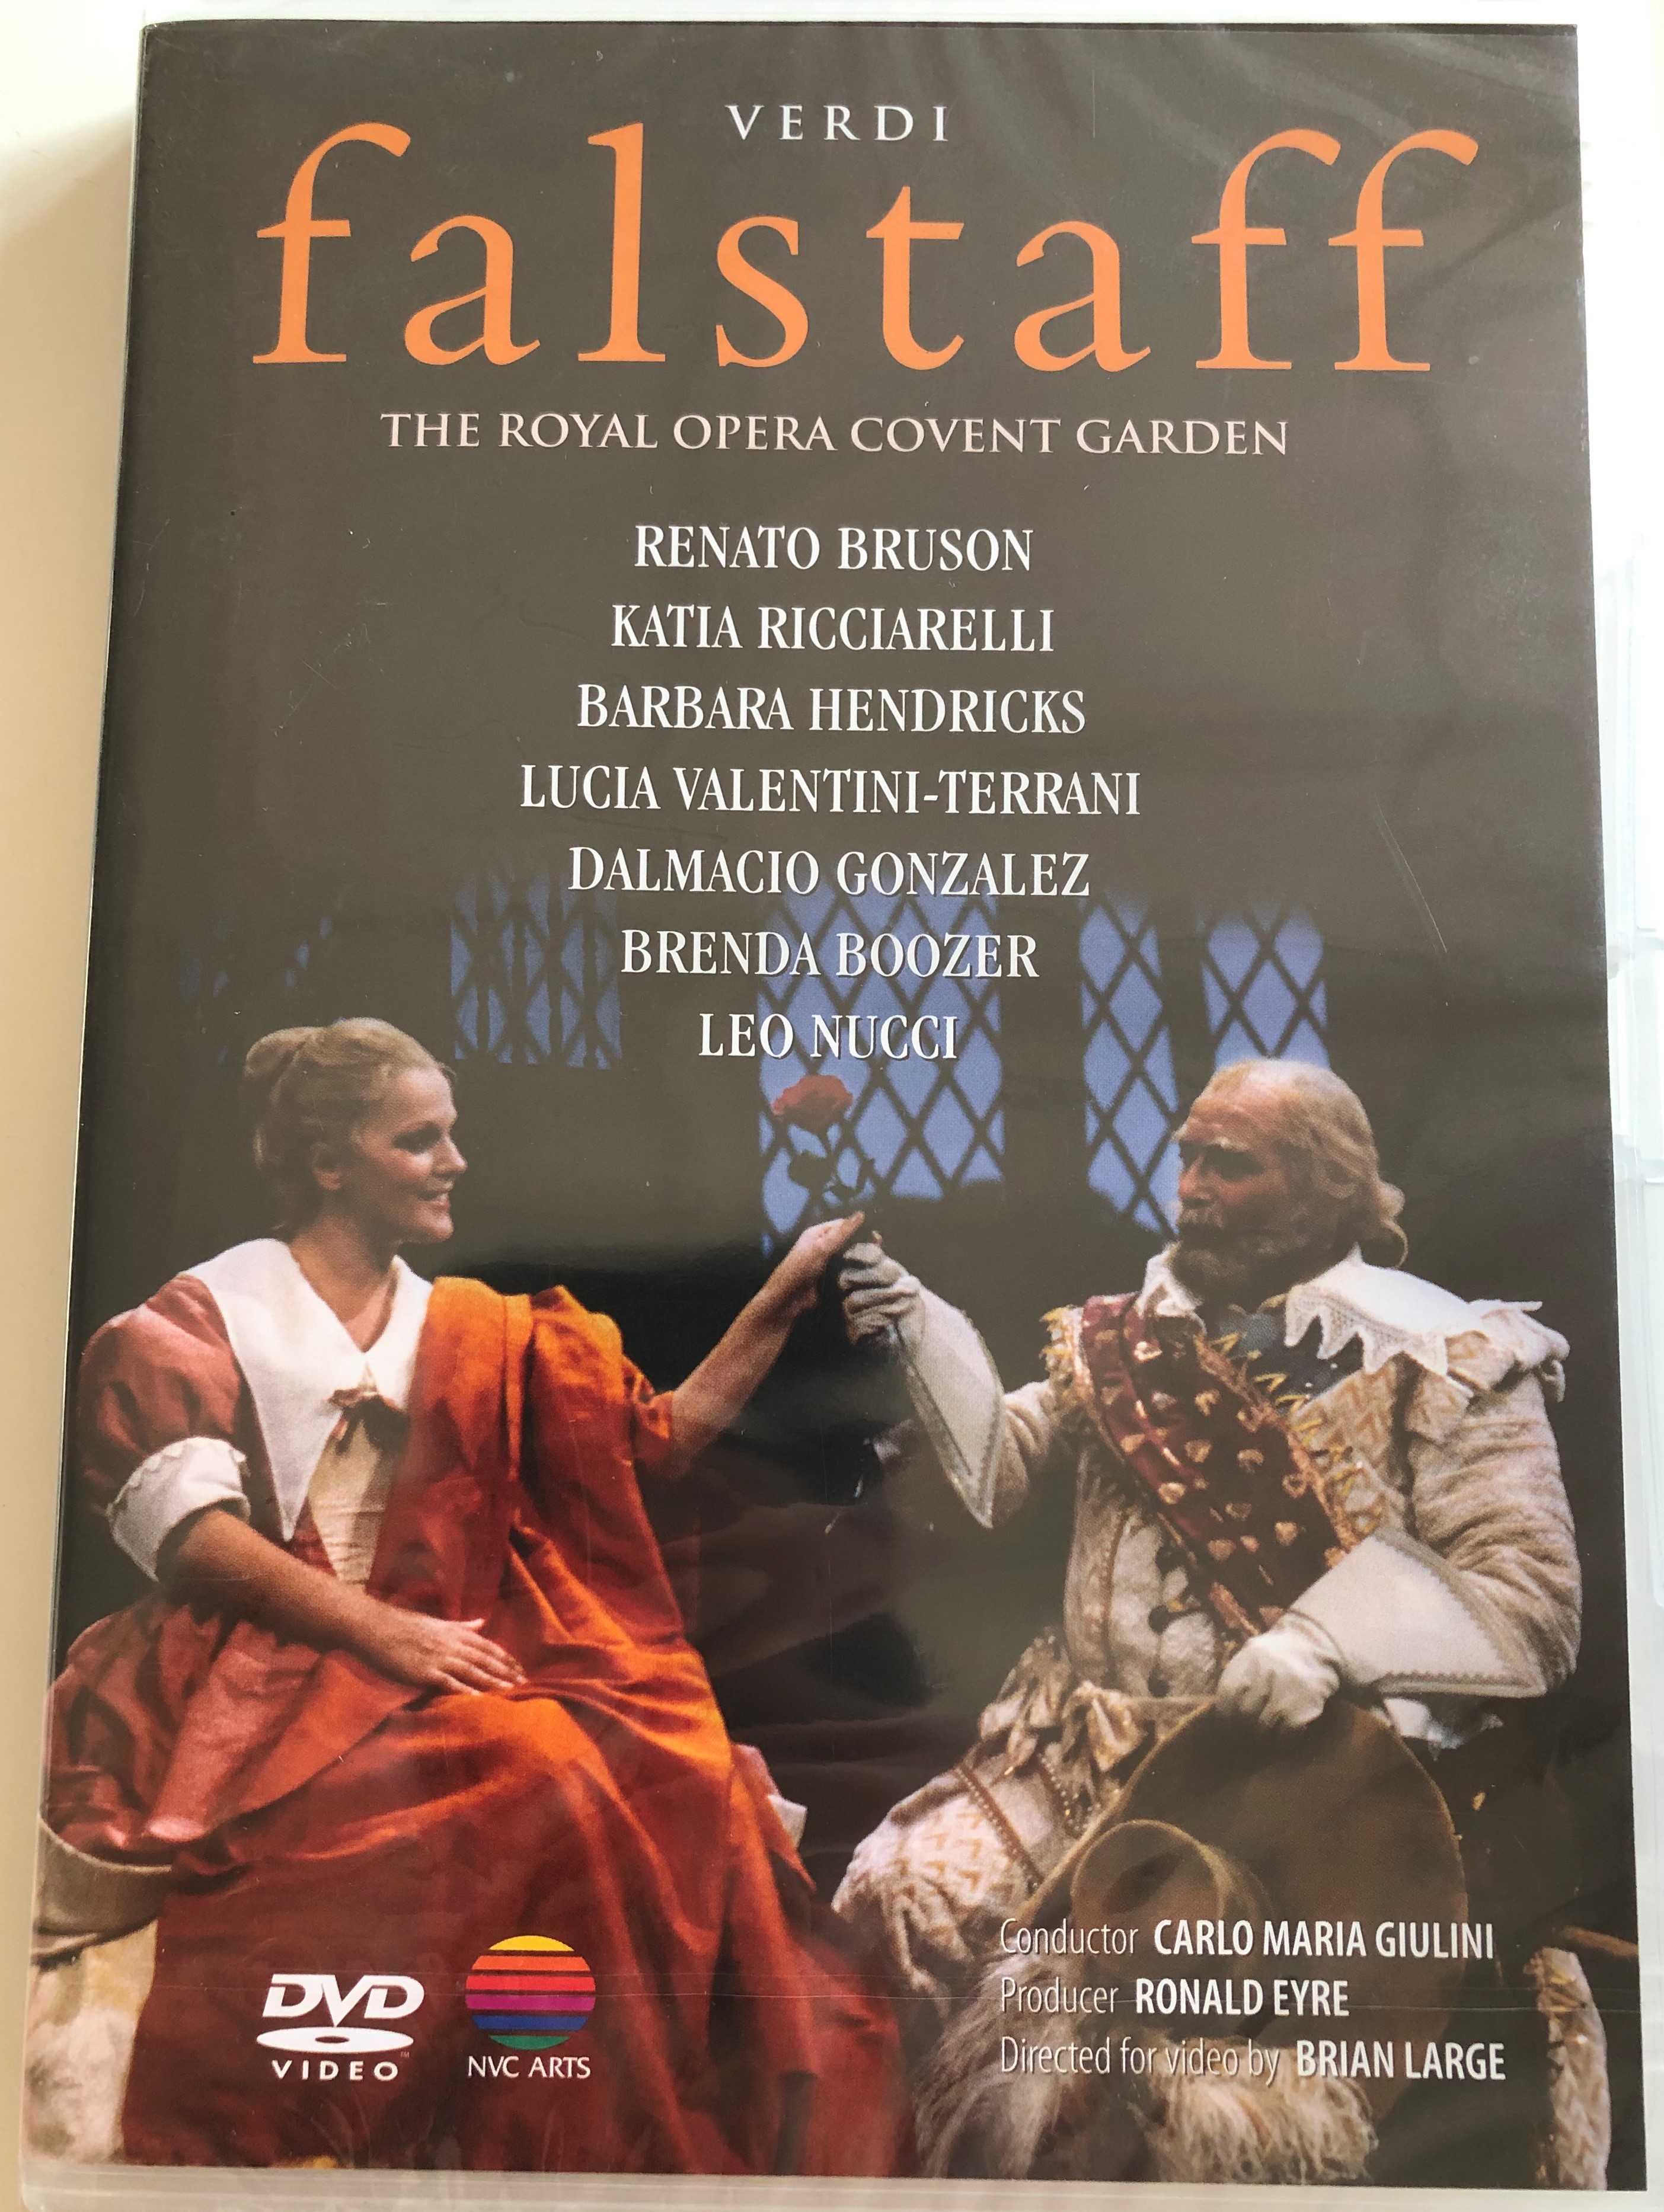 Verdi - falstaff DVD 1982 The Royal opera Covent Garden 1.JPG